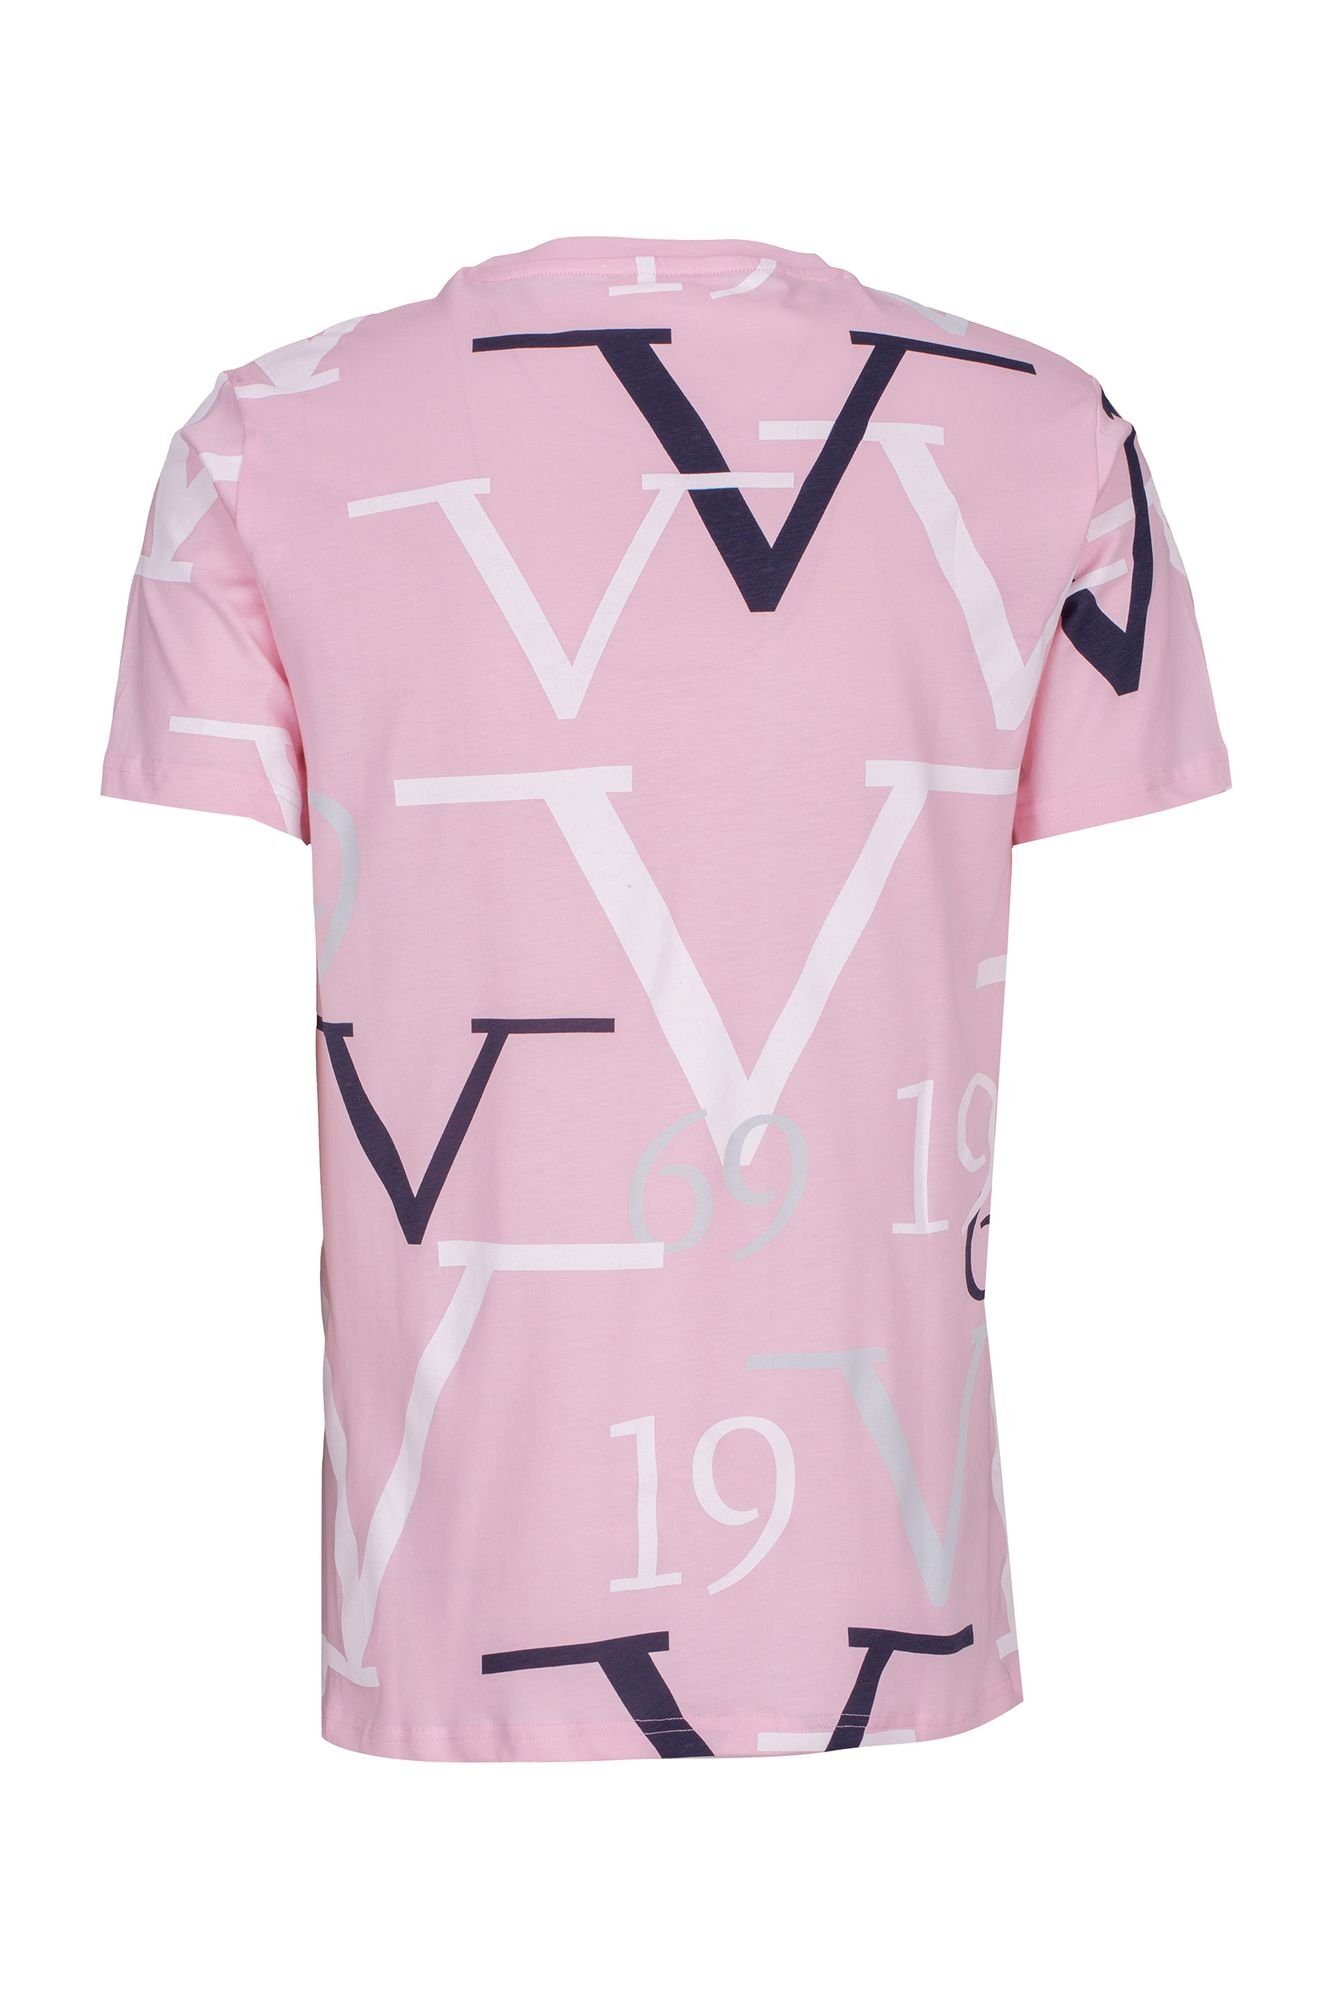 Edoardo by 19V69 Versace T-Shirt Italia